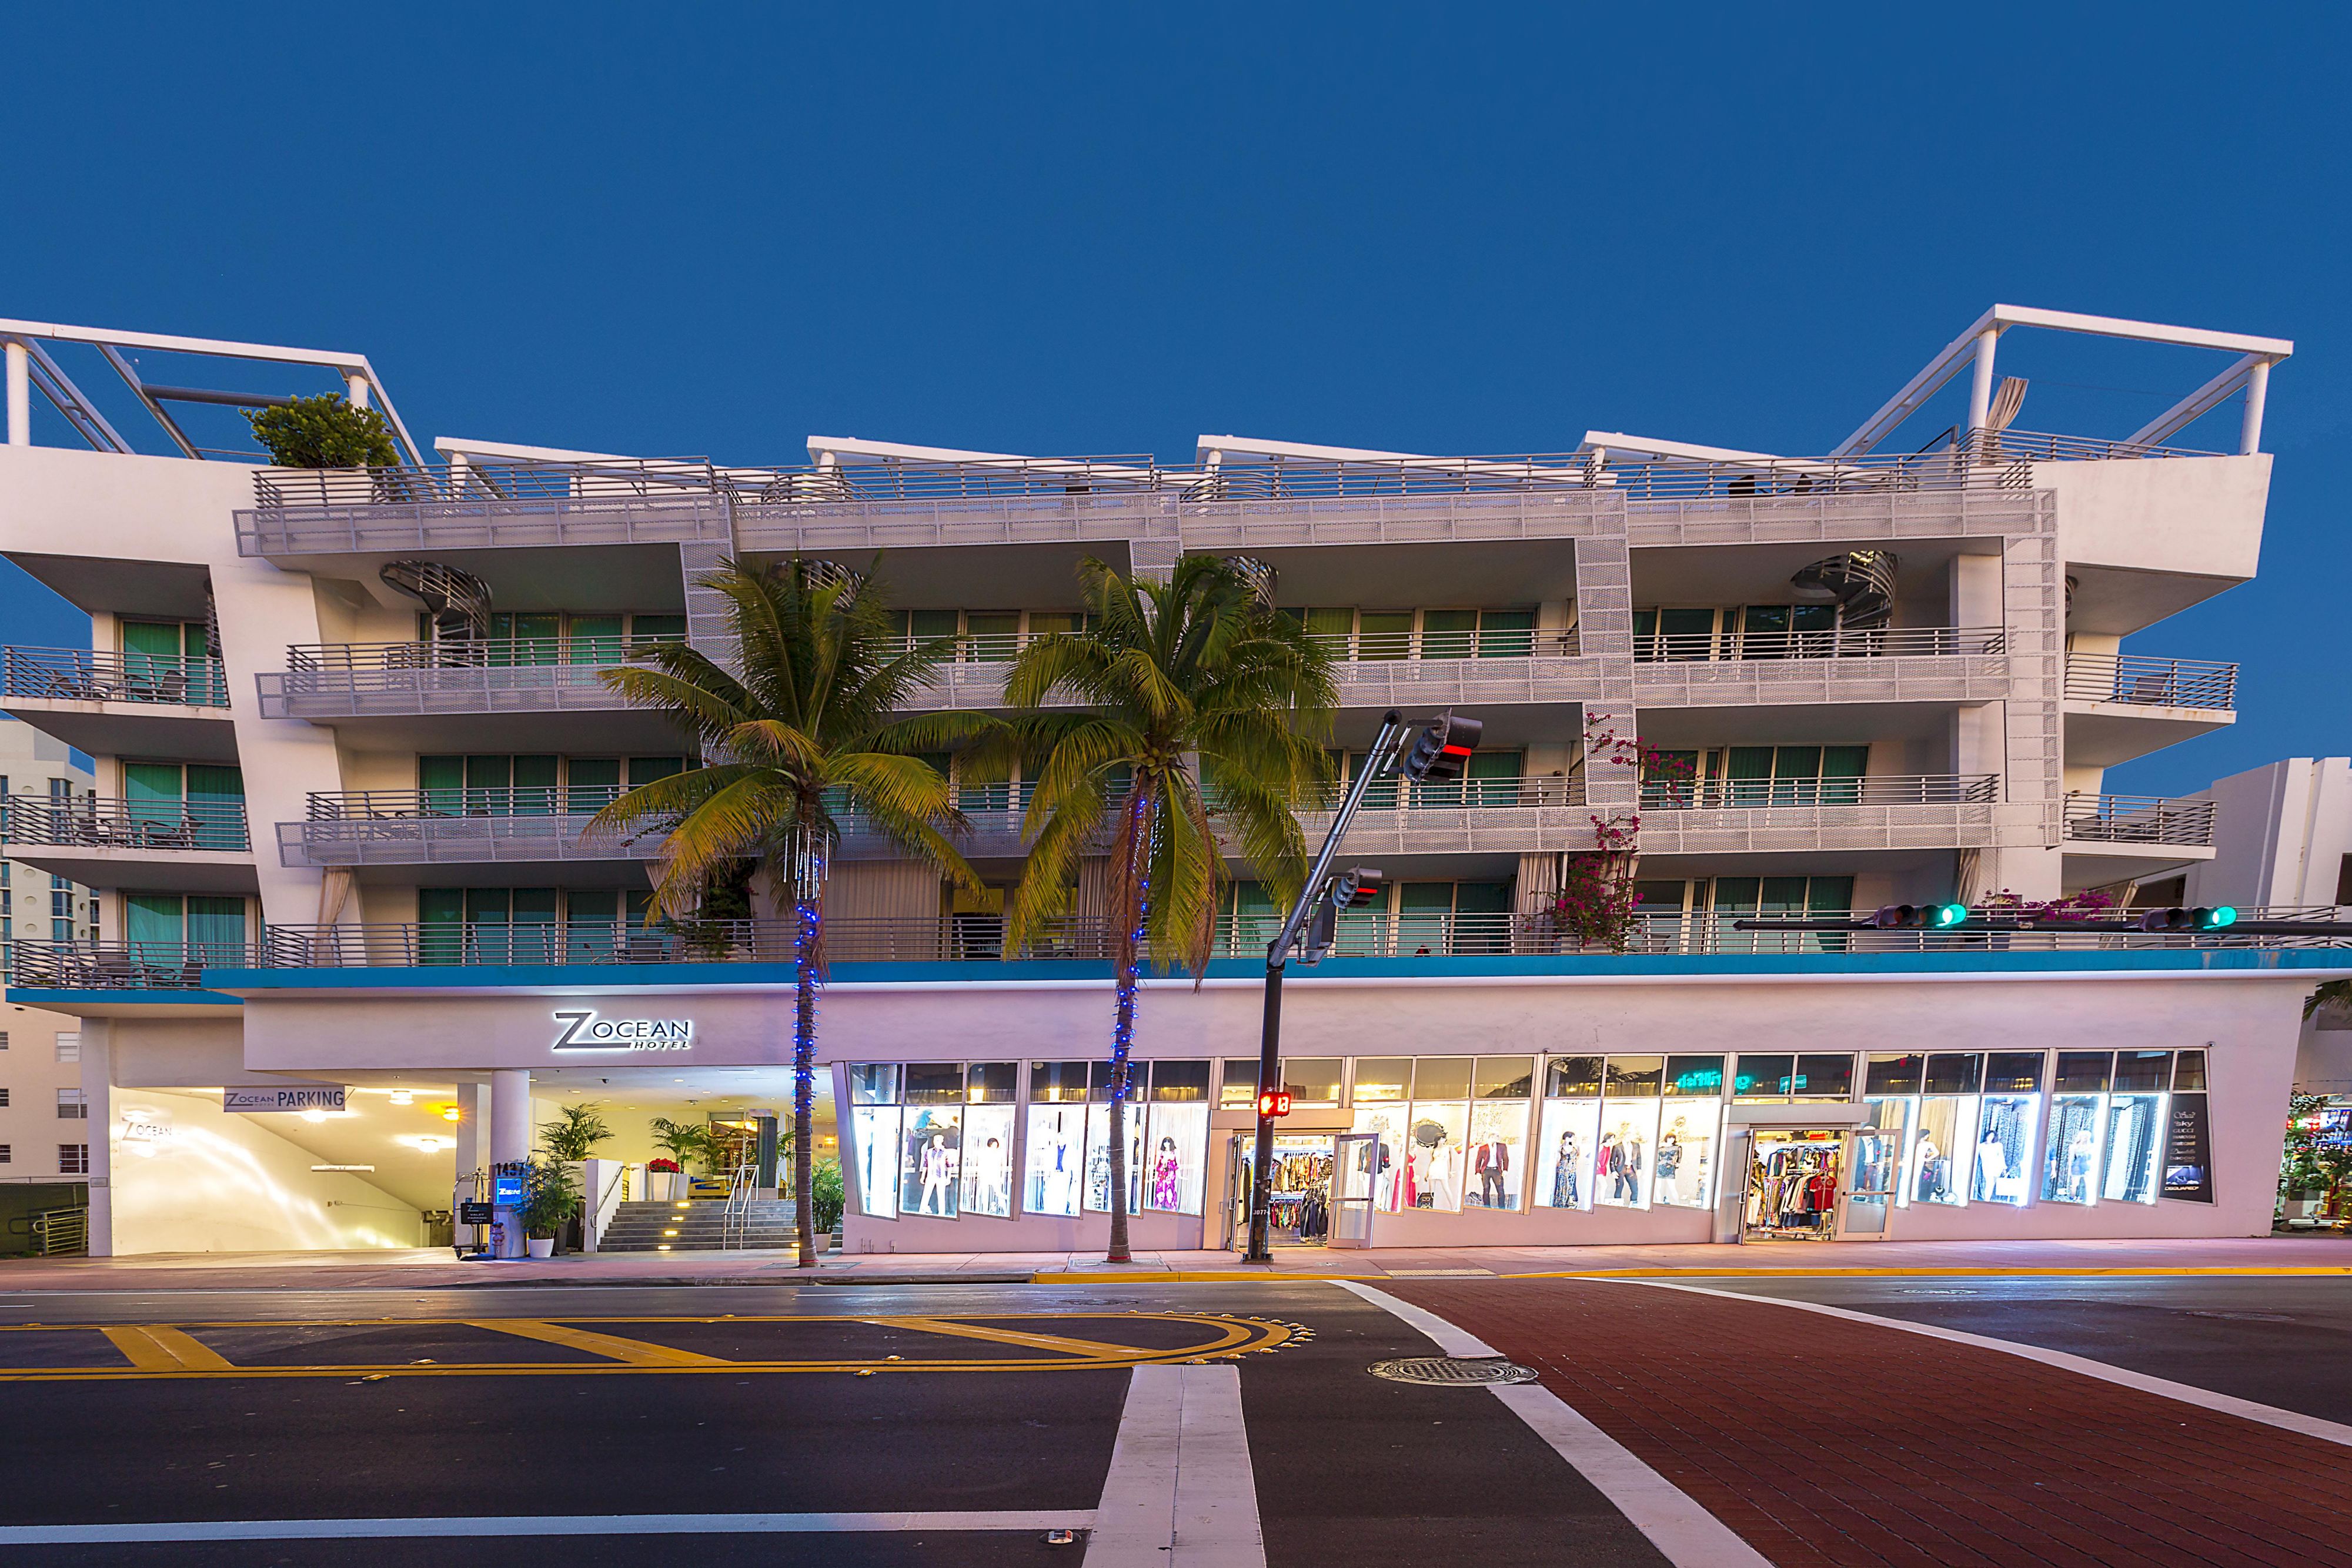 Ocean Drive Hotel in South Beach